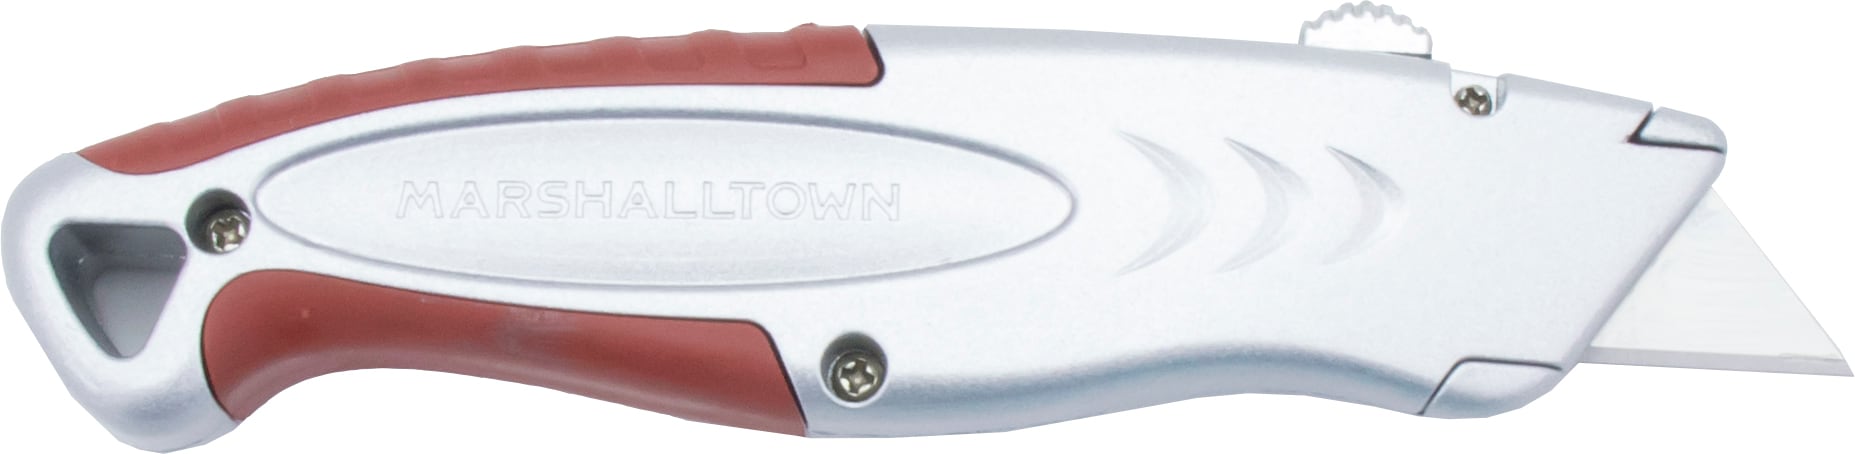 ROLSON 10pc Mini Utility Knife Blades - Fairway Electrical